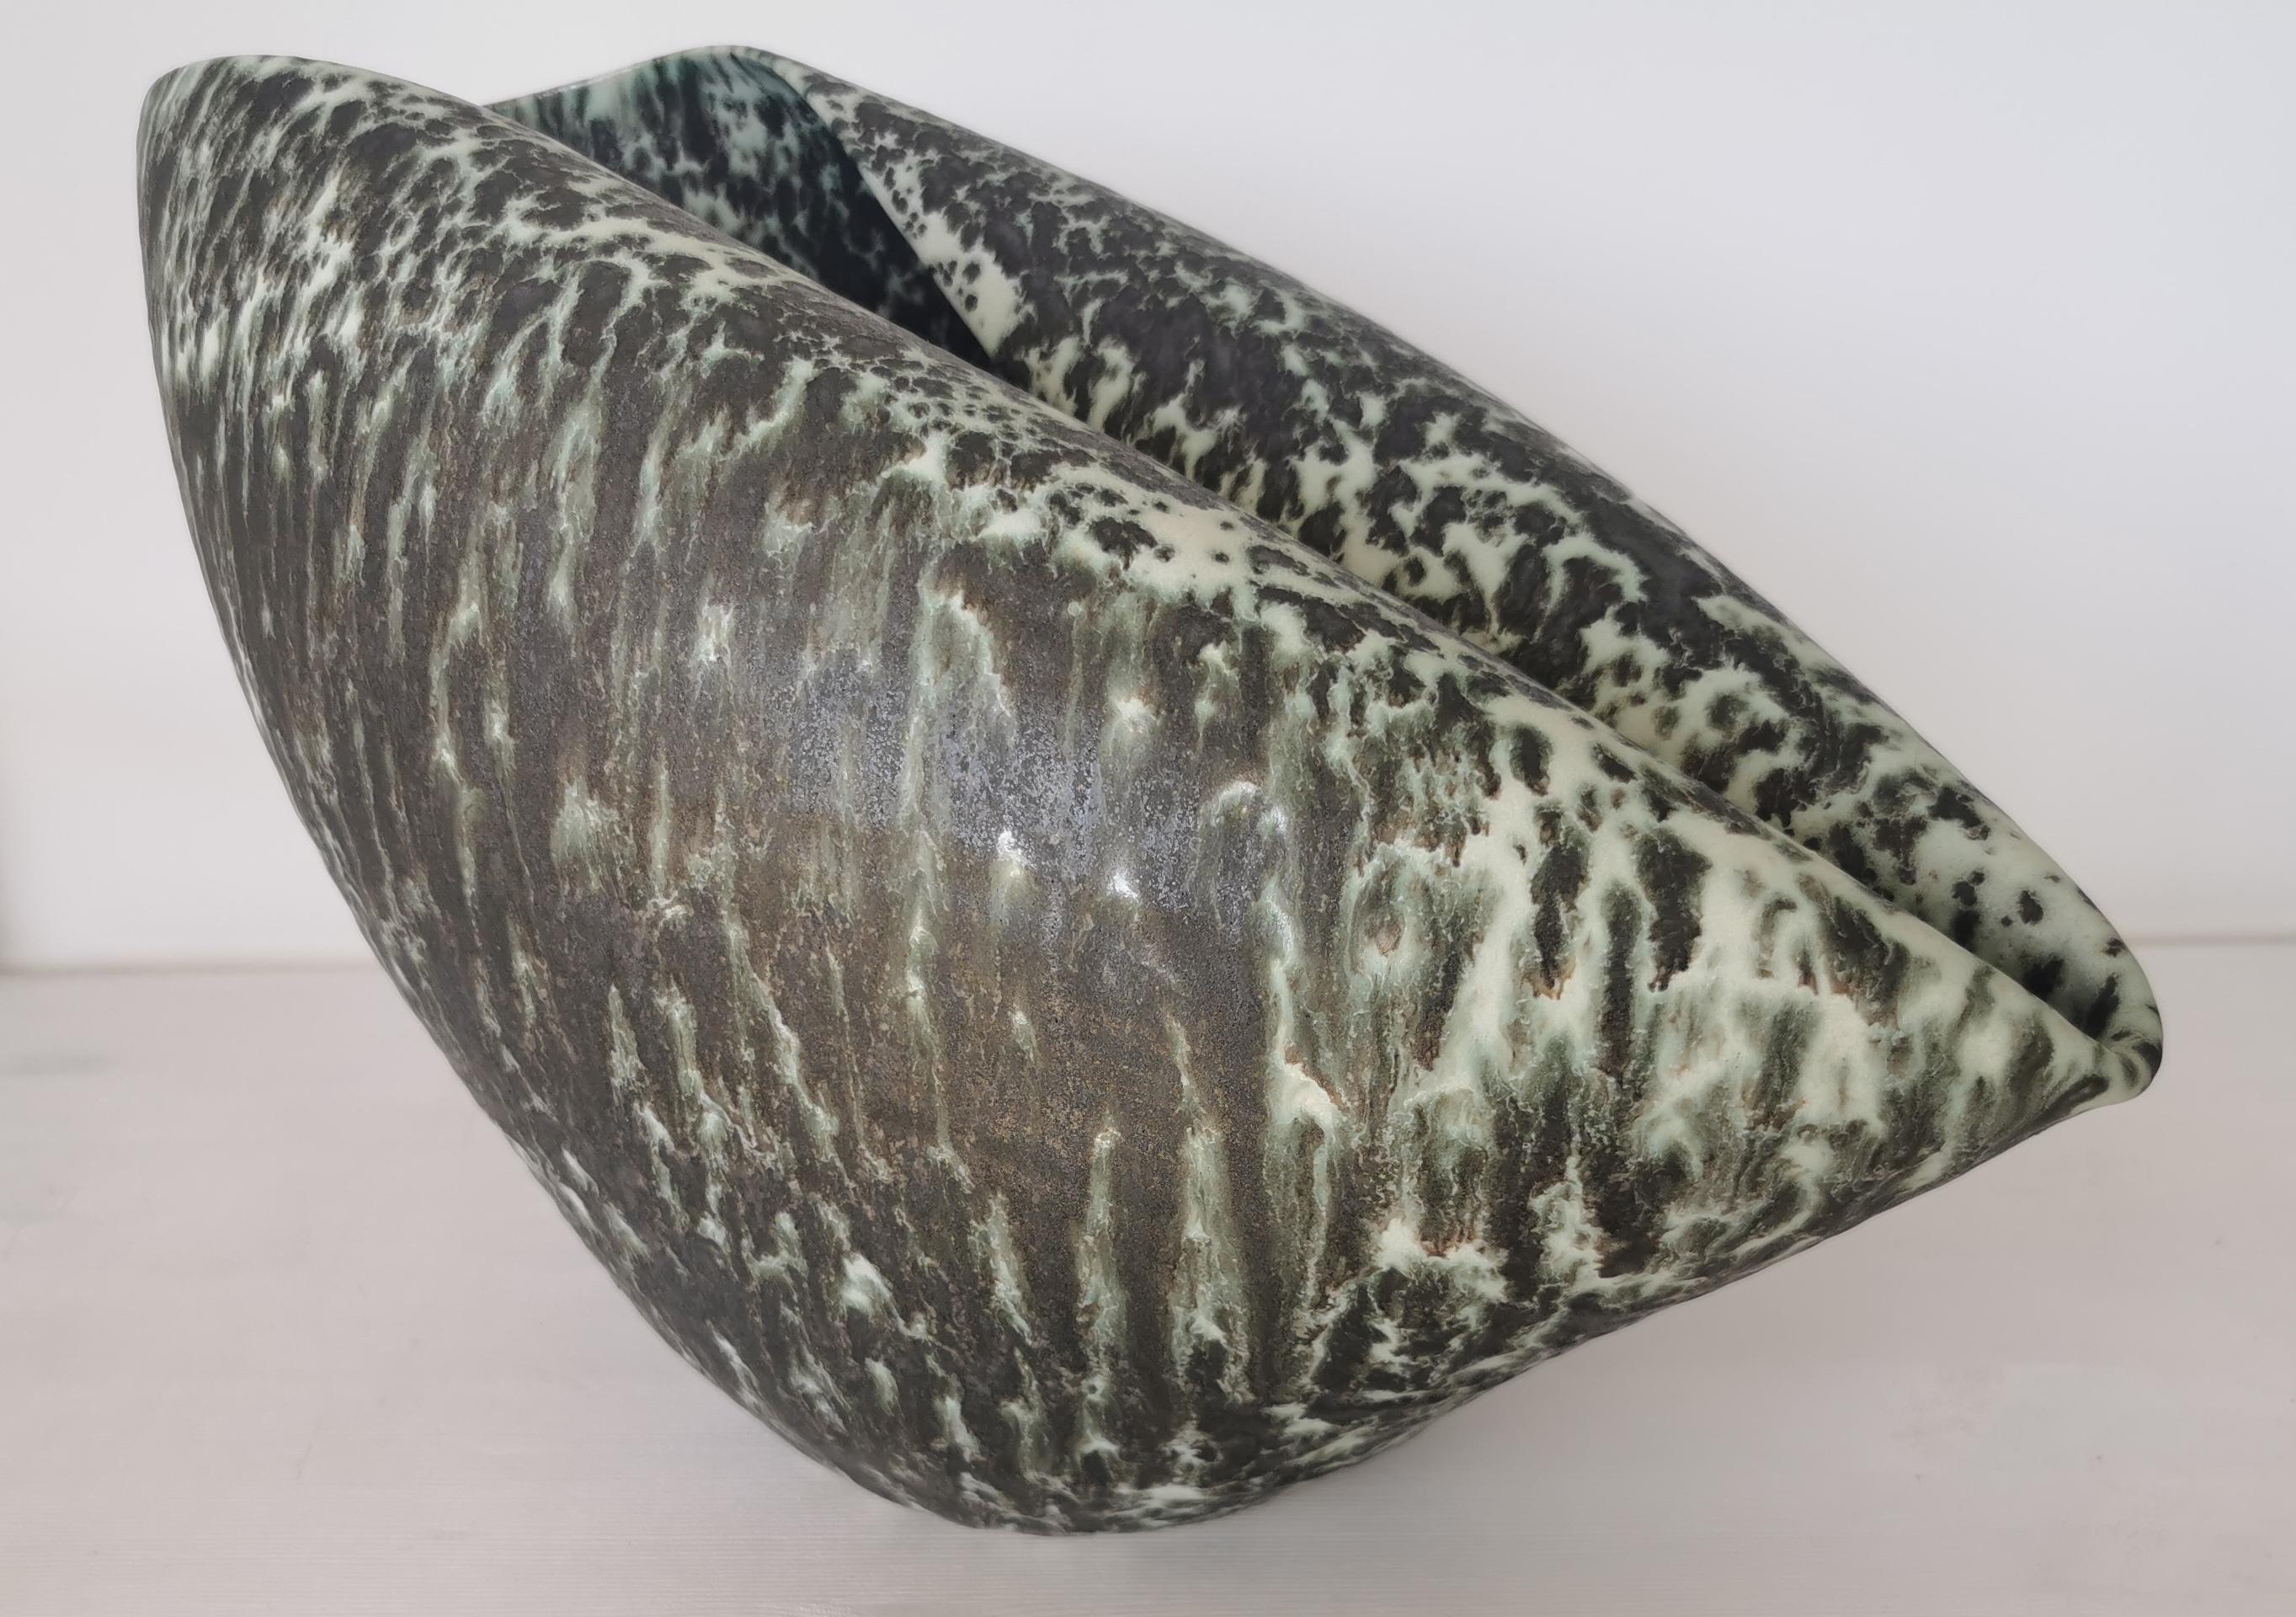 Oval Form with Green and Black Speckled Glaze, Vessel No.98, Ceramic Sculpture For Sale 2